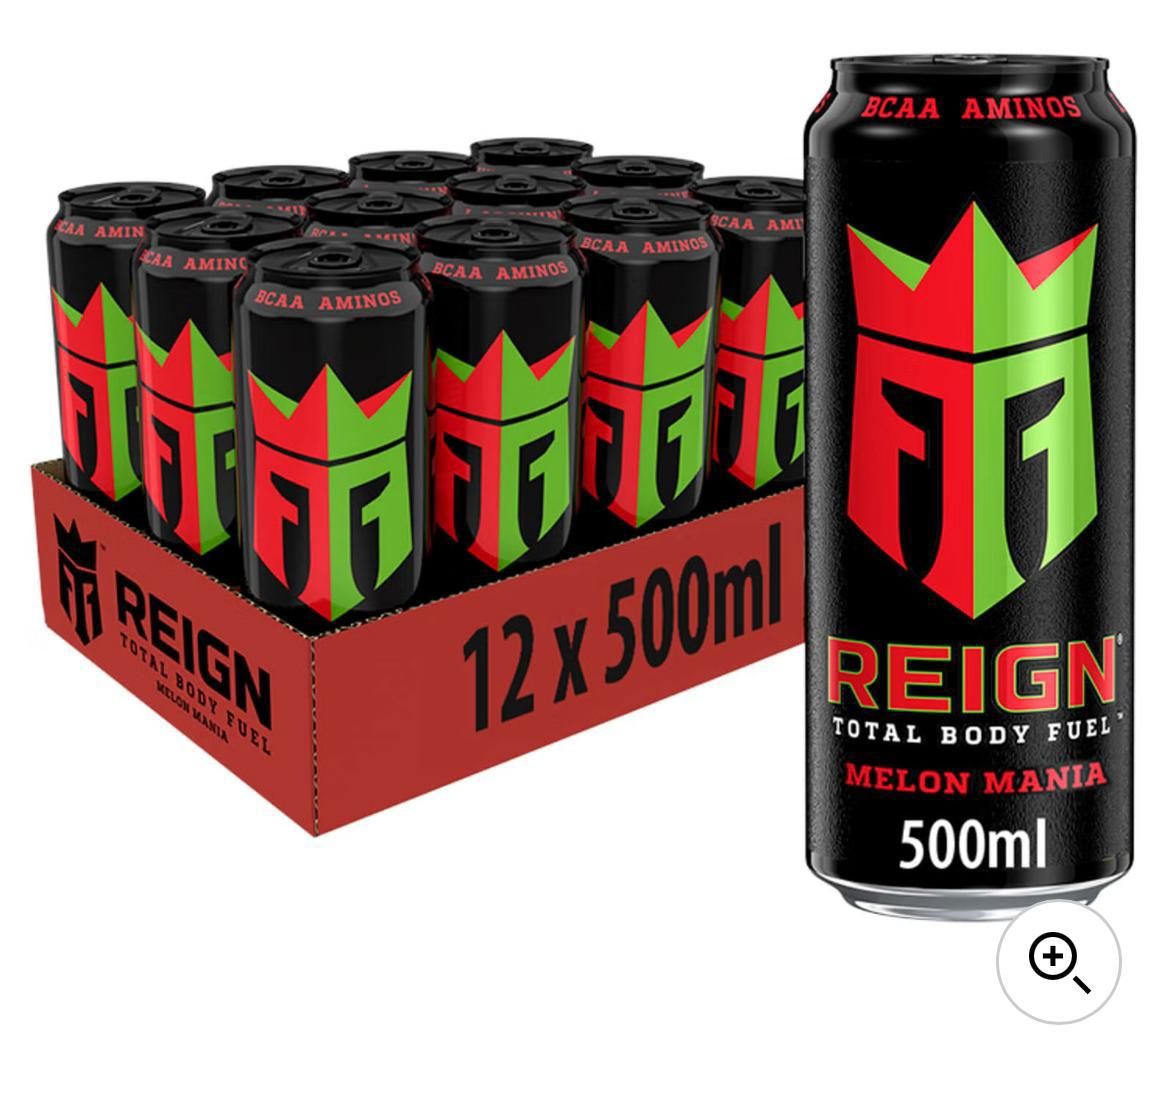 Reign melon mania 12x500ml  BBE 03/25 12 cans 